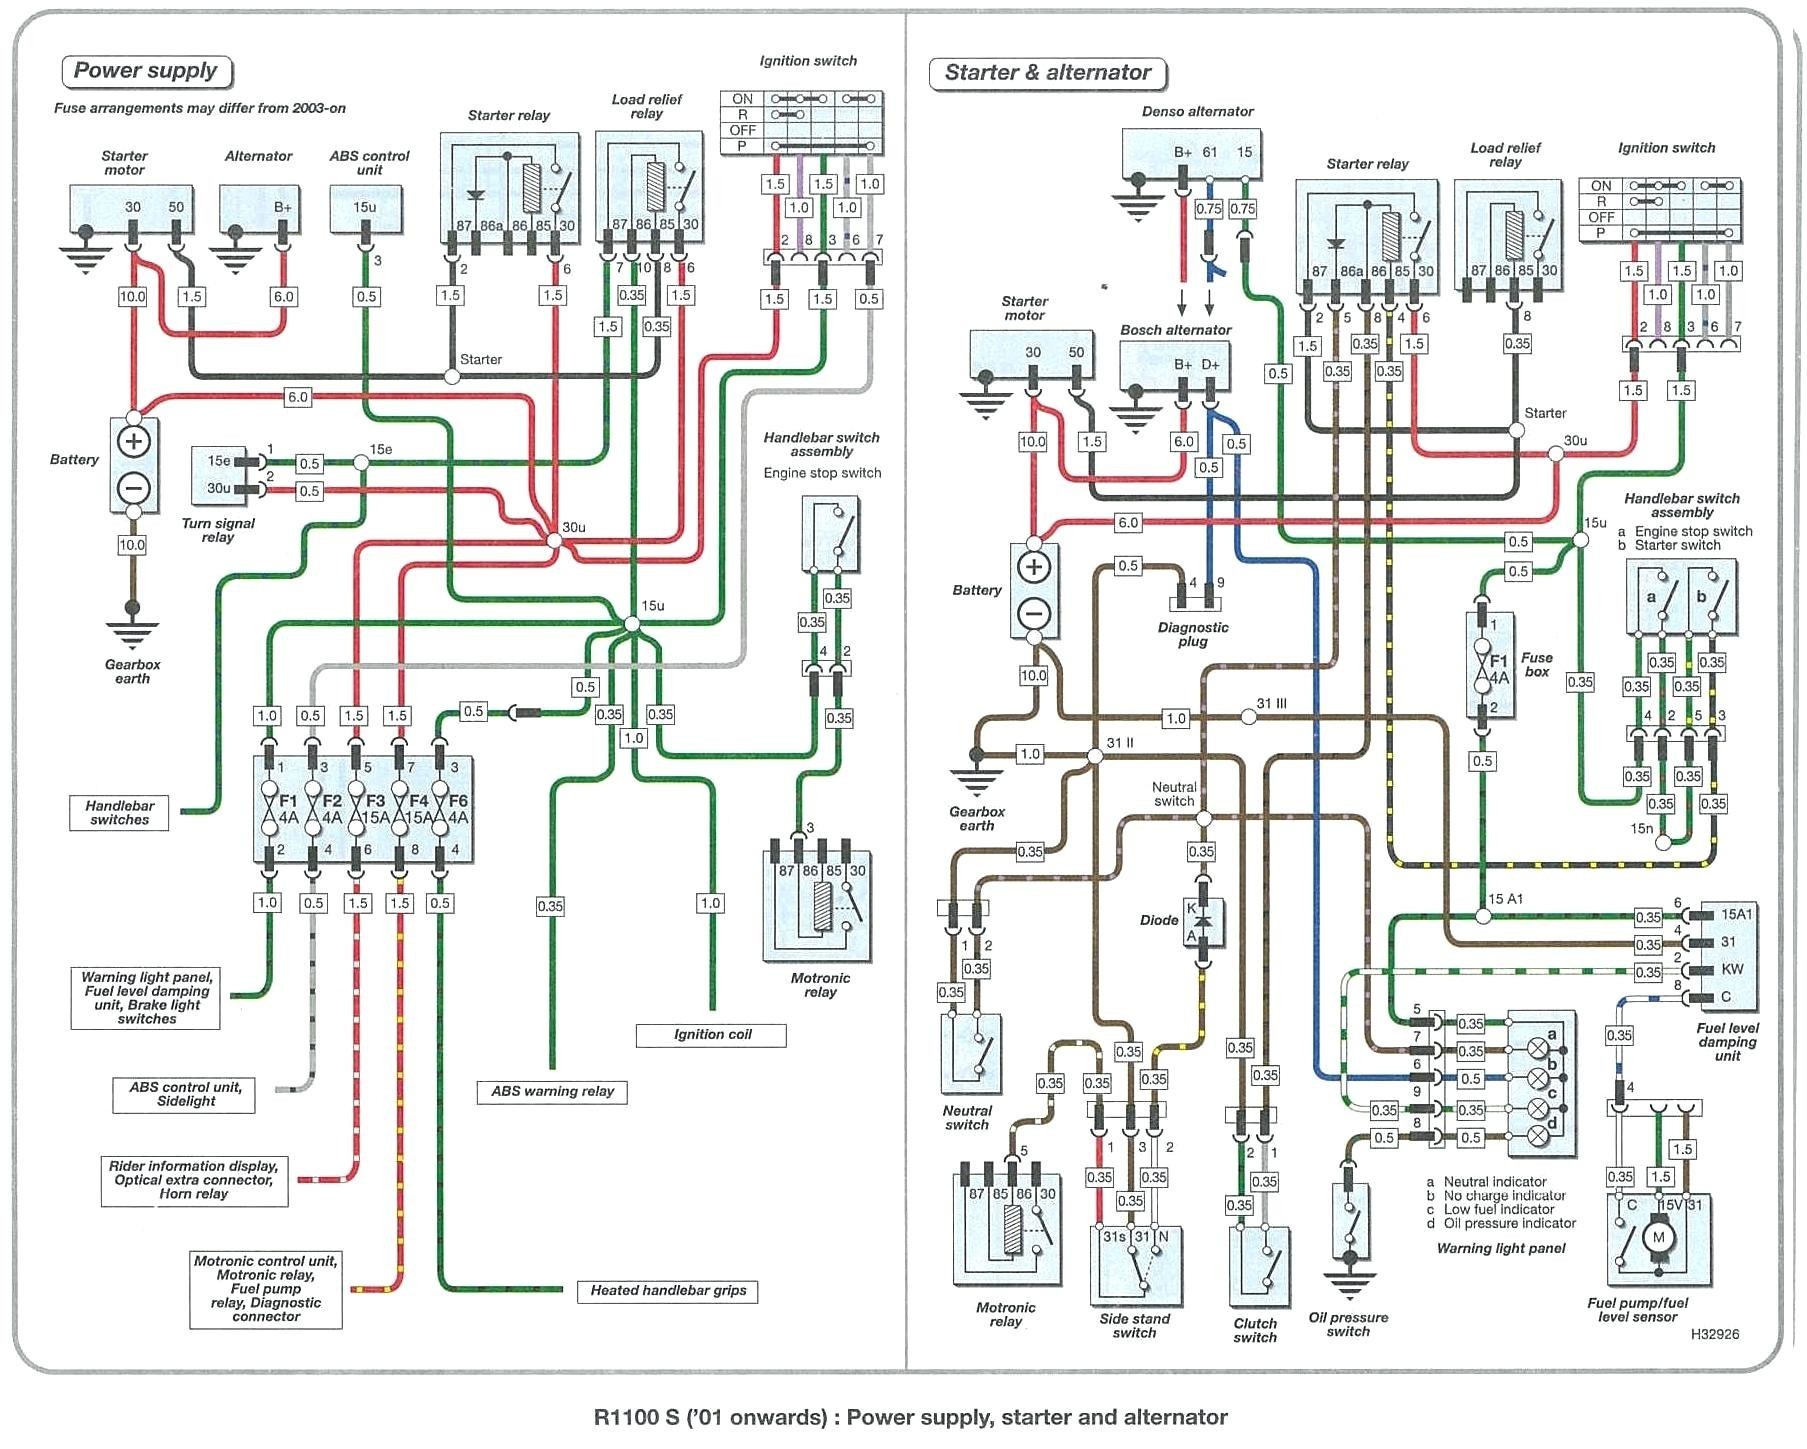 bmw m3 wiring diagram explained wiring diagrams rh dmdelectro co bmw e46 wiring diagram bmw e46 wiring diagram